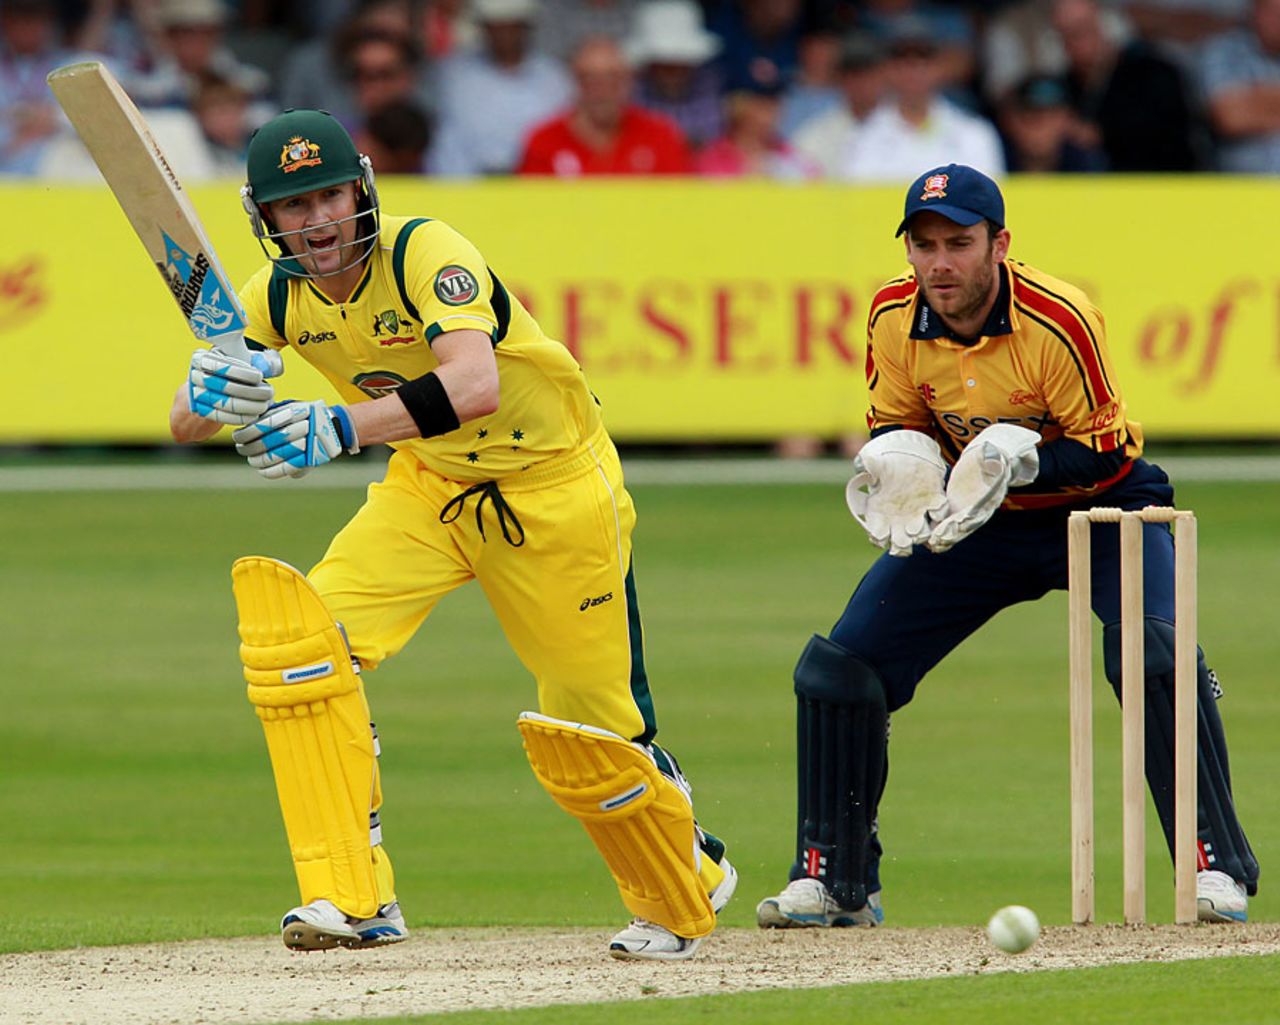 Michael Clarke retired to give other batsmen a chance, Essex v Australians, Tour match, Chelmsford, June 26, 2012